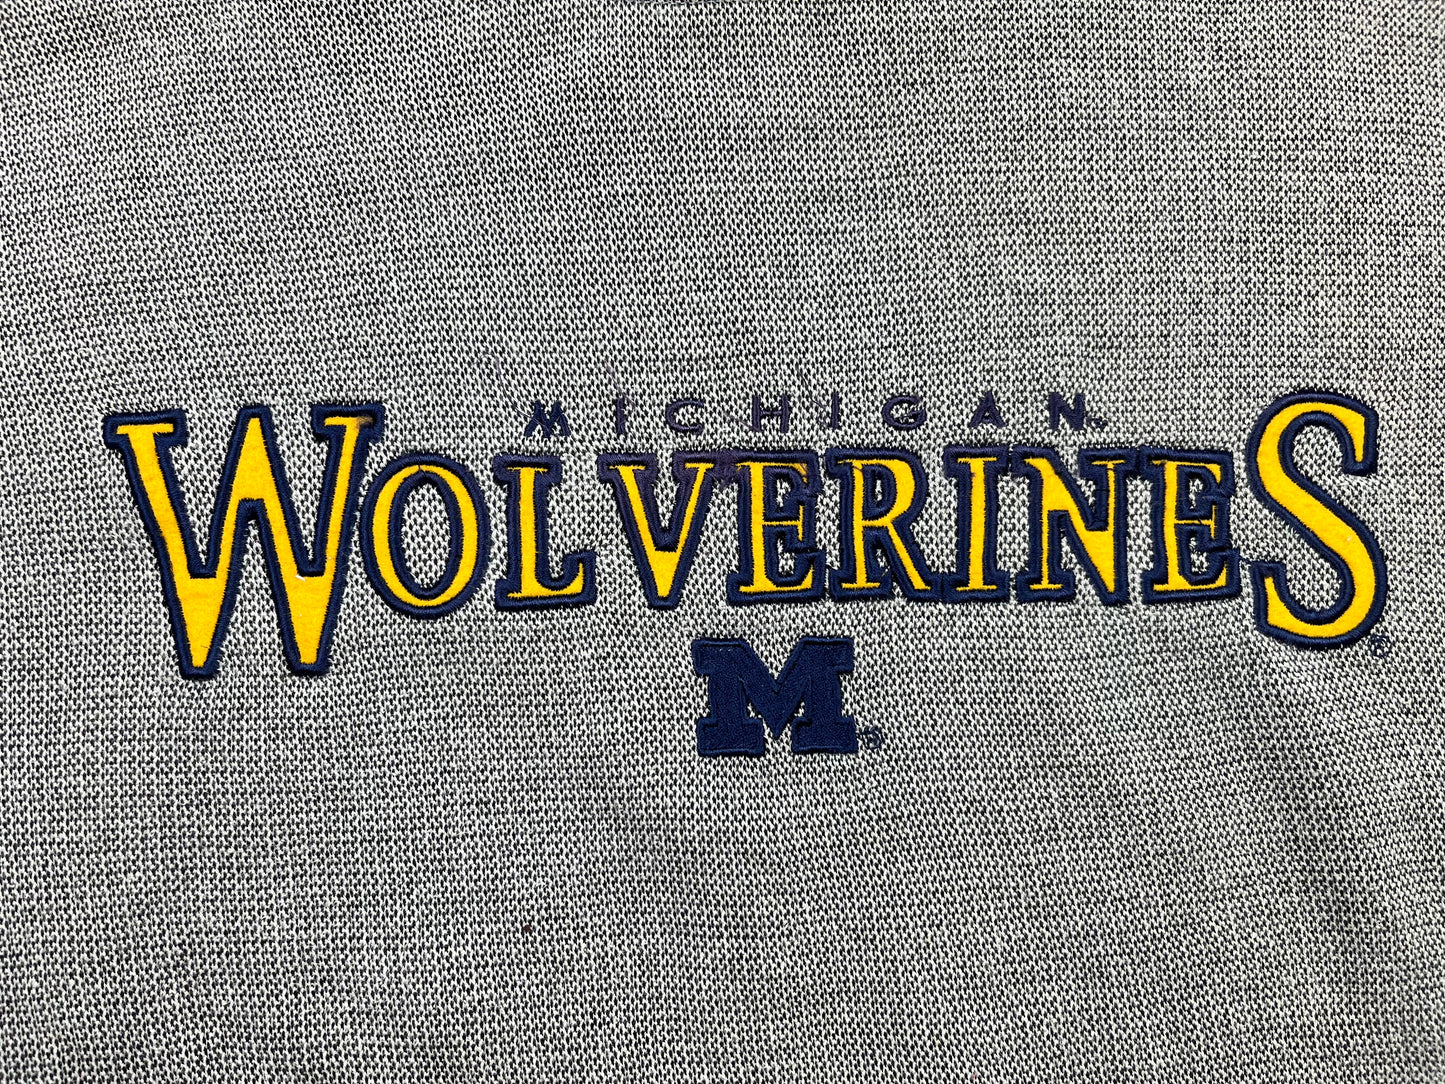 Michigan Wolverines Embroidered Crewneck